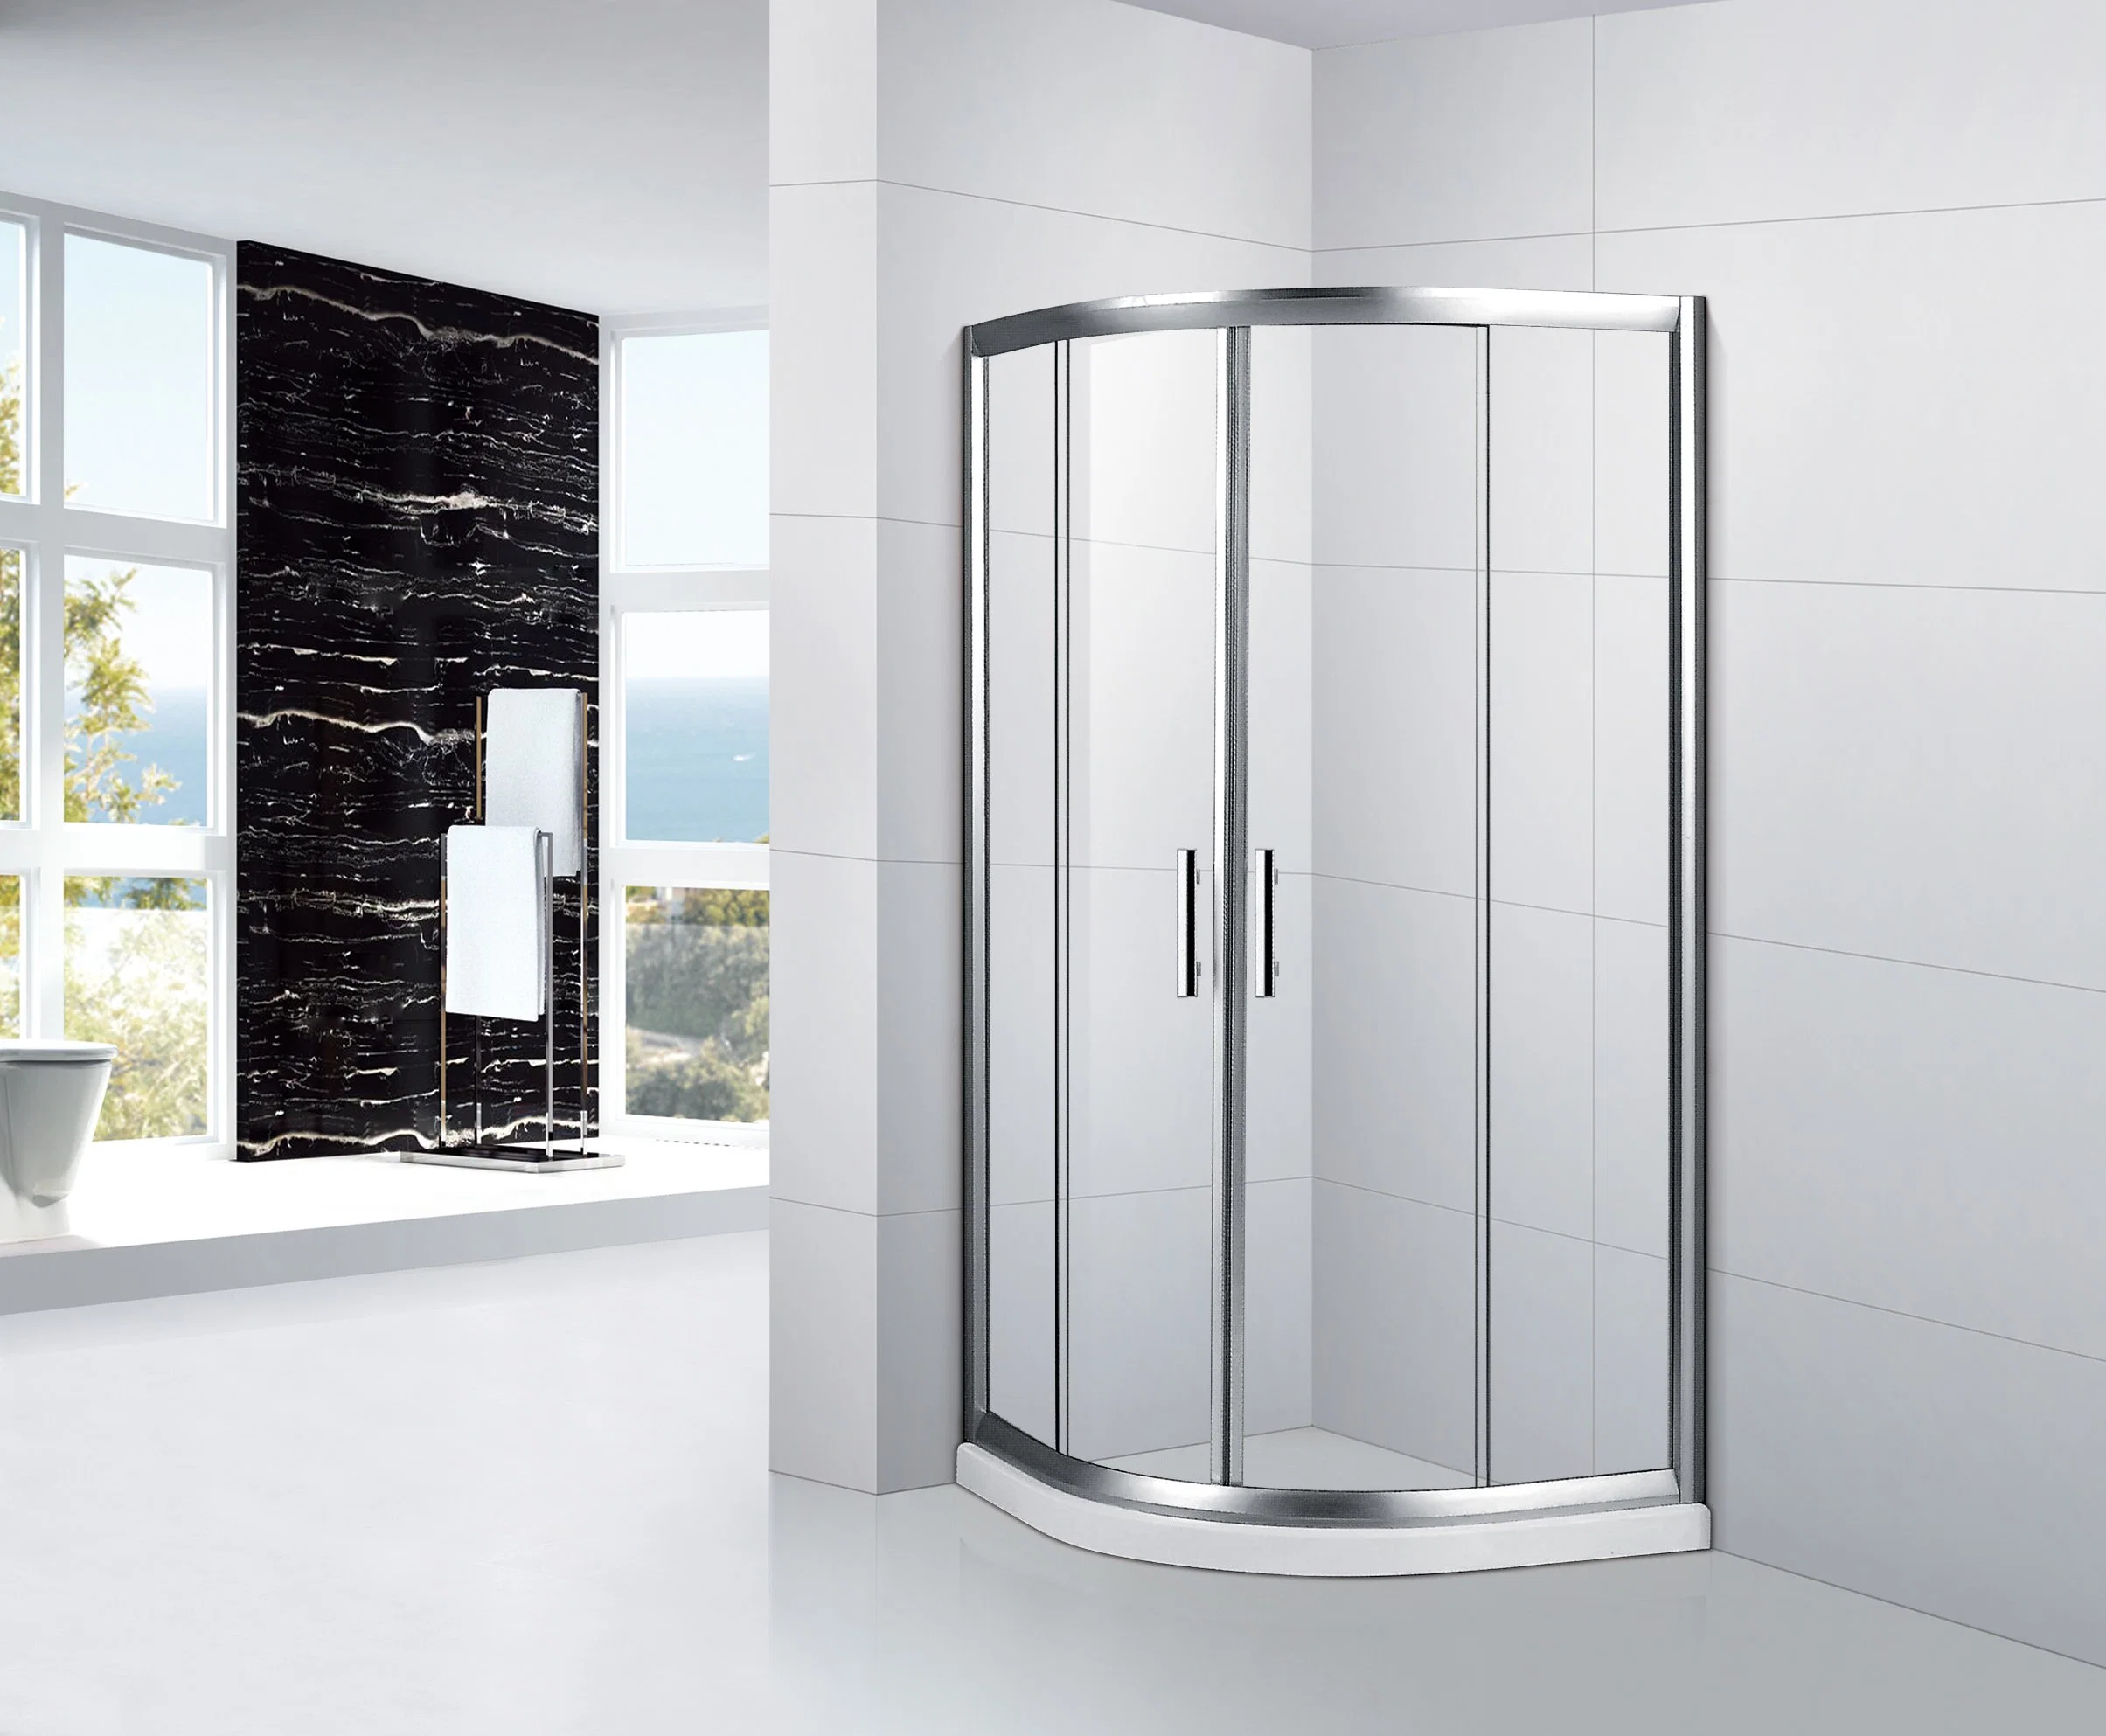 Bathroom Screens Sliding Door Frameless Glass Enclosure Shower Liner Cabin